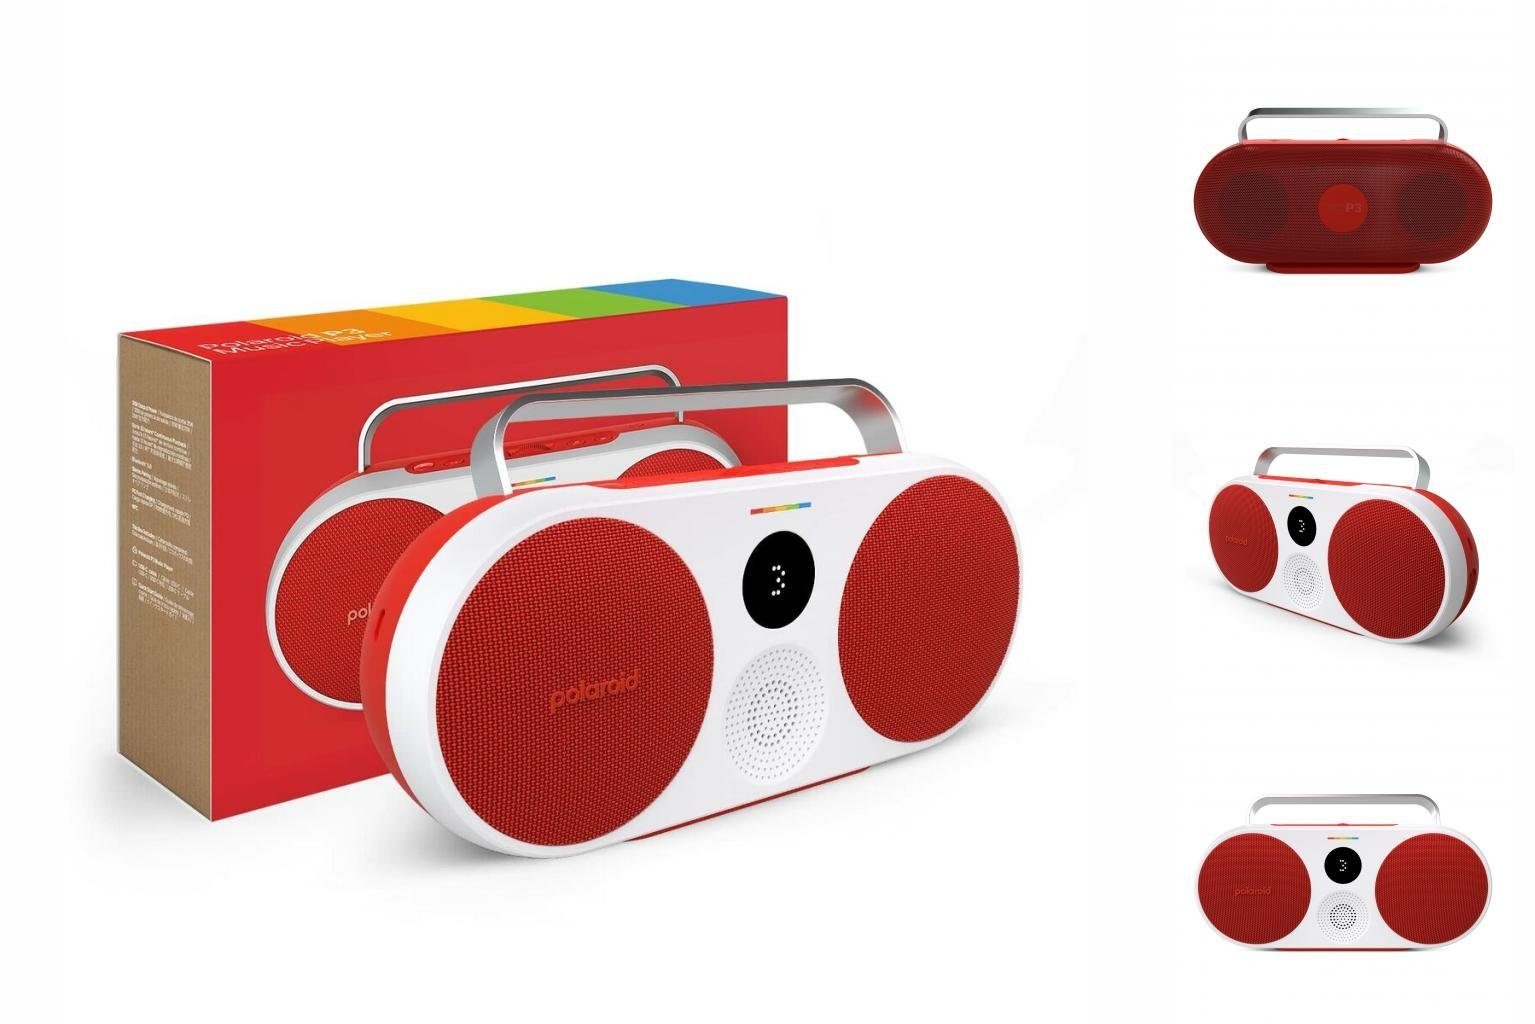 Polaroid Polaroid P3 Tragbare Bluetooth-Lautsprecher Lautsprecher Rot